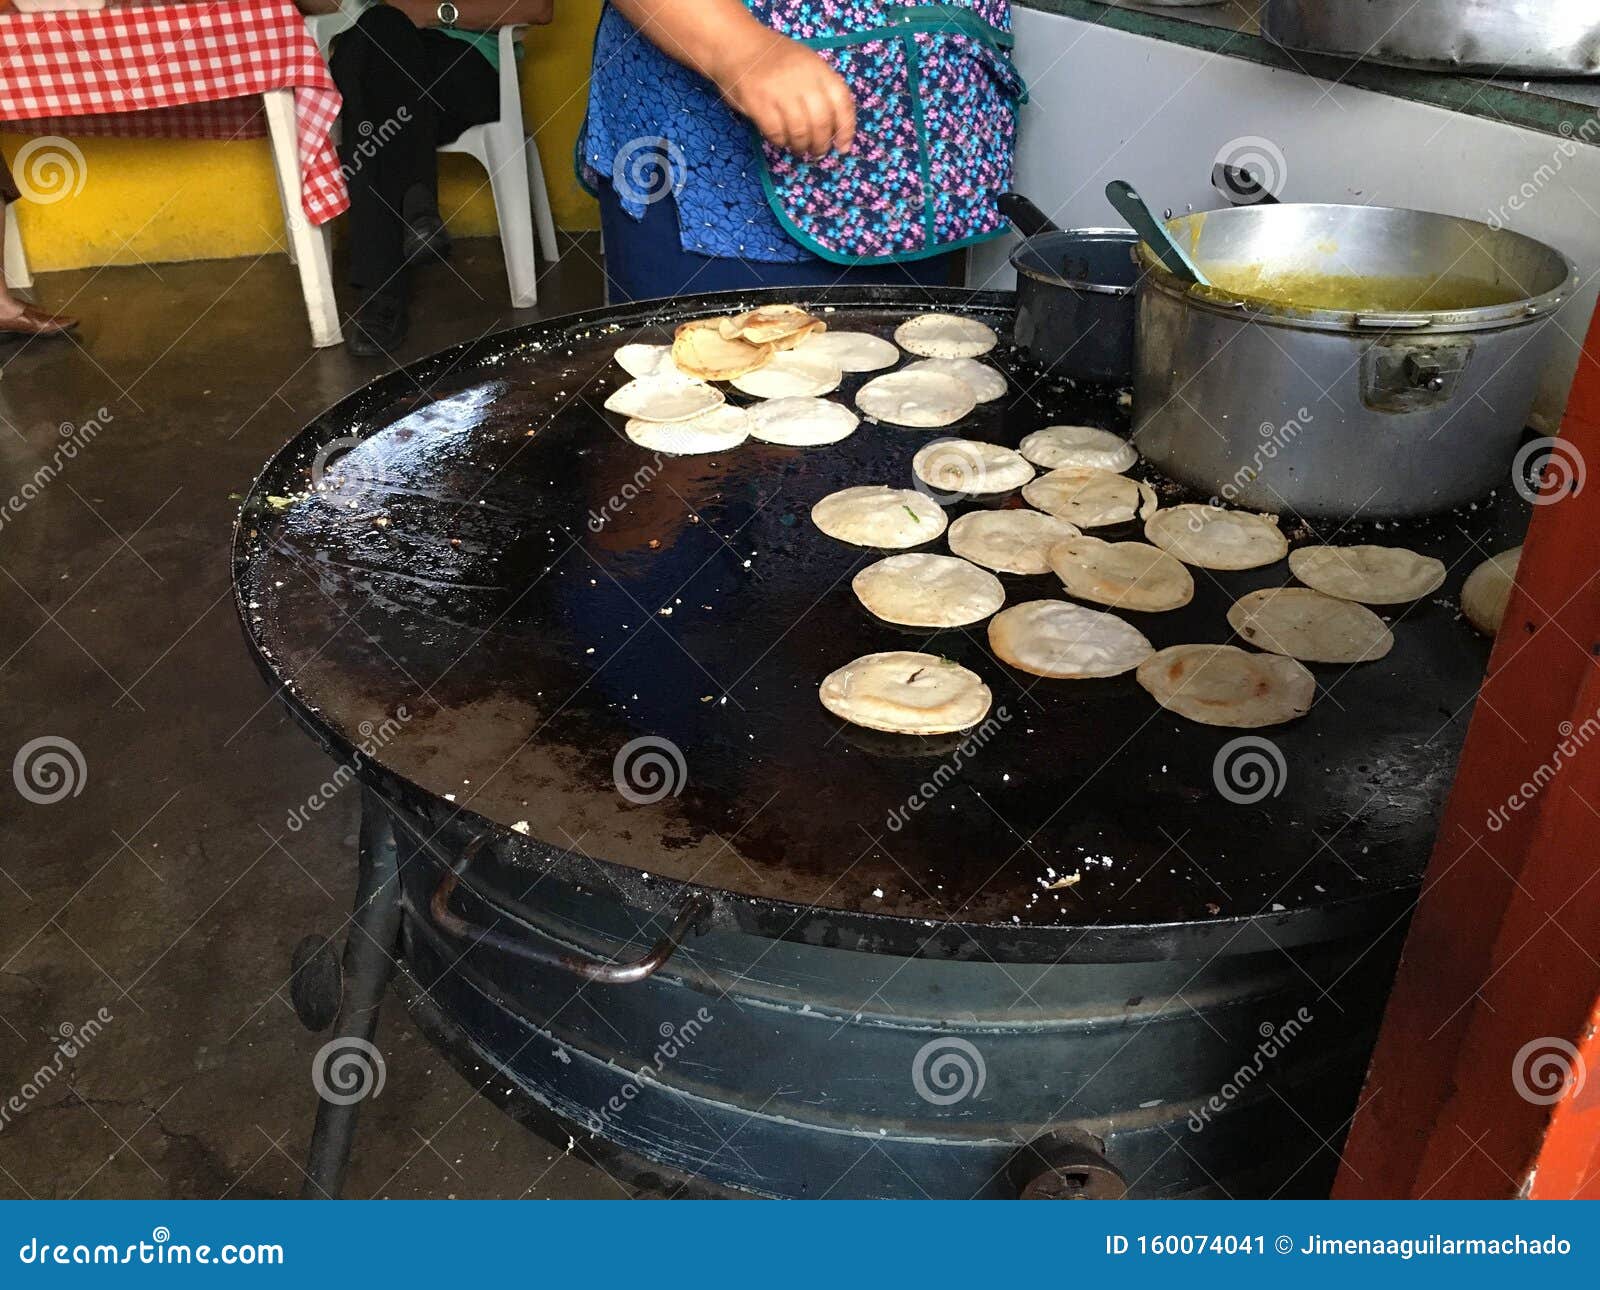 https://thumbs.dreamstime.com/z/tortillas-hot-comal-tortillas-hot-comal-making-mexican-food-its-hot-made-corn-160074041.jpg